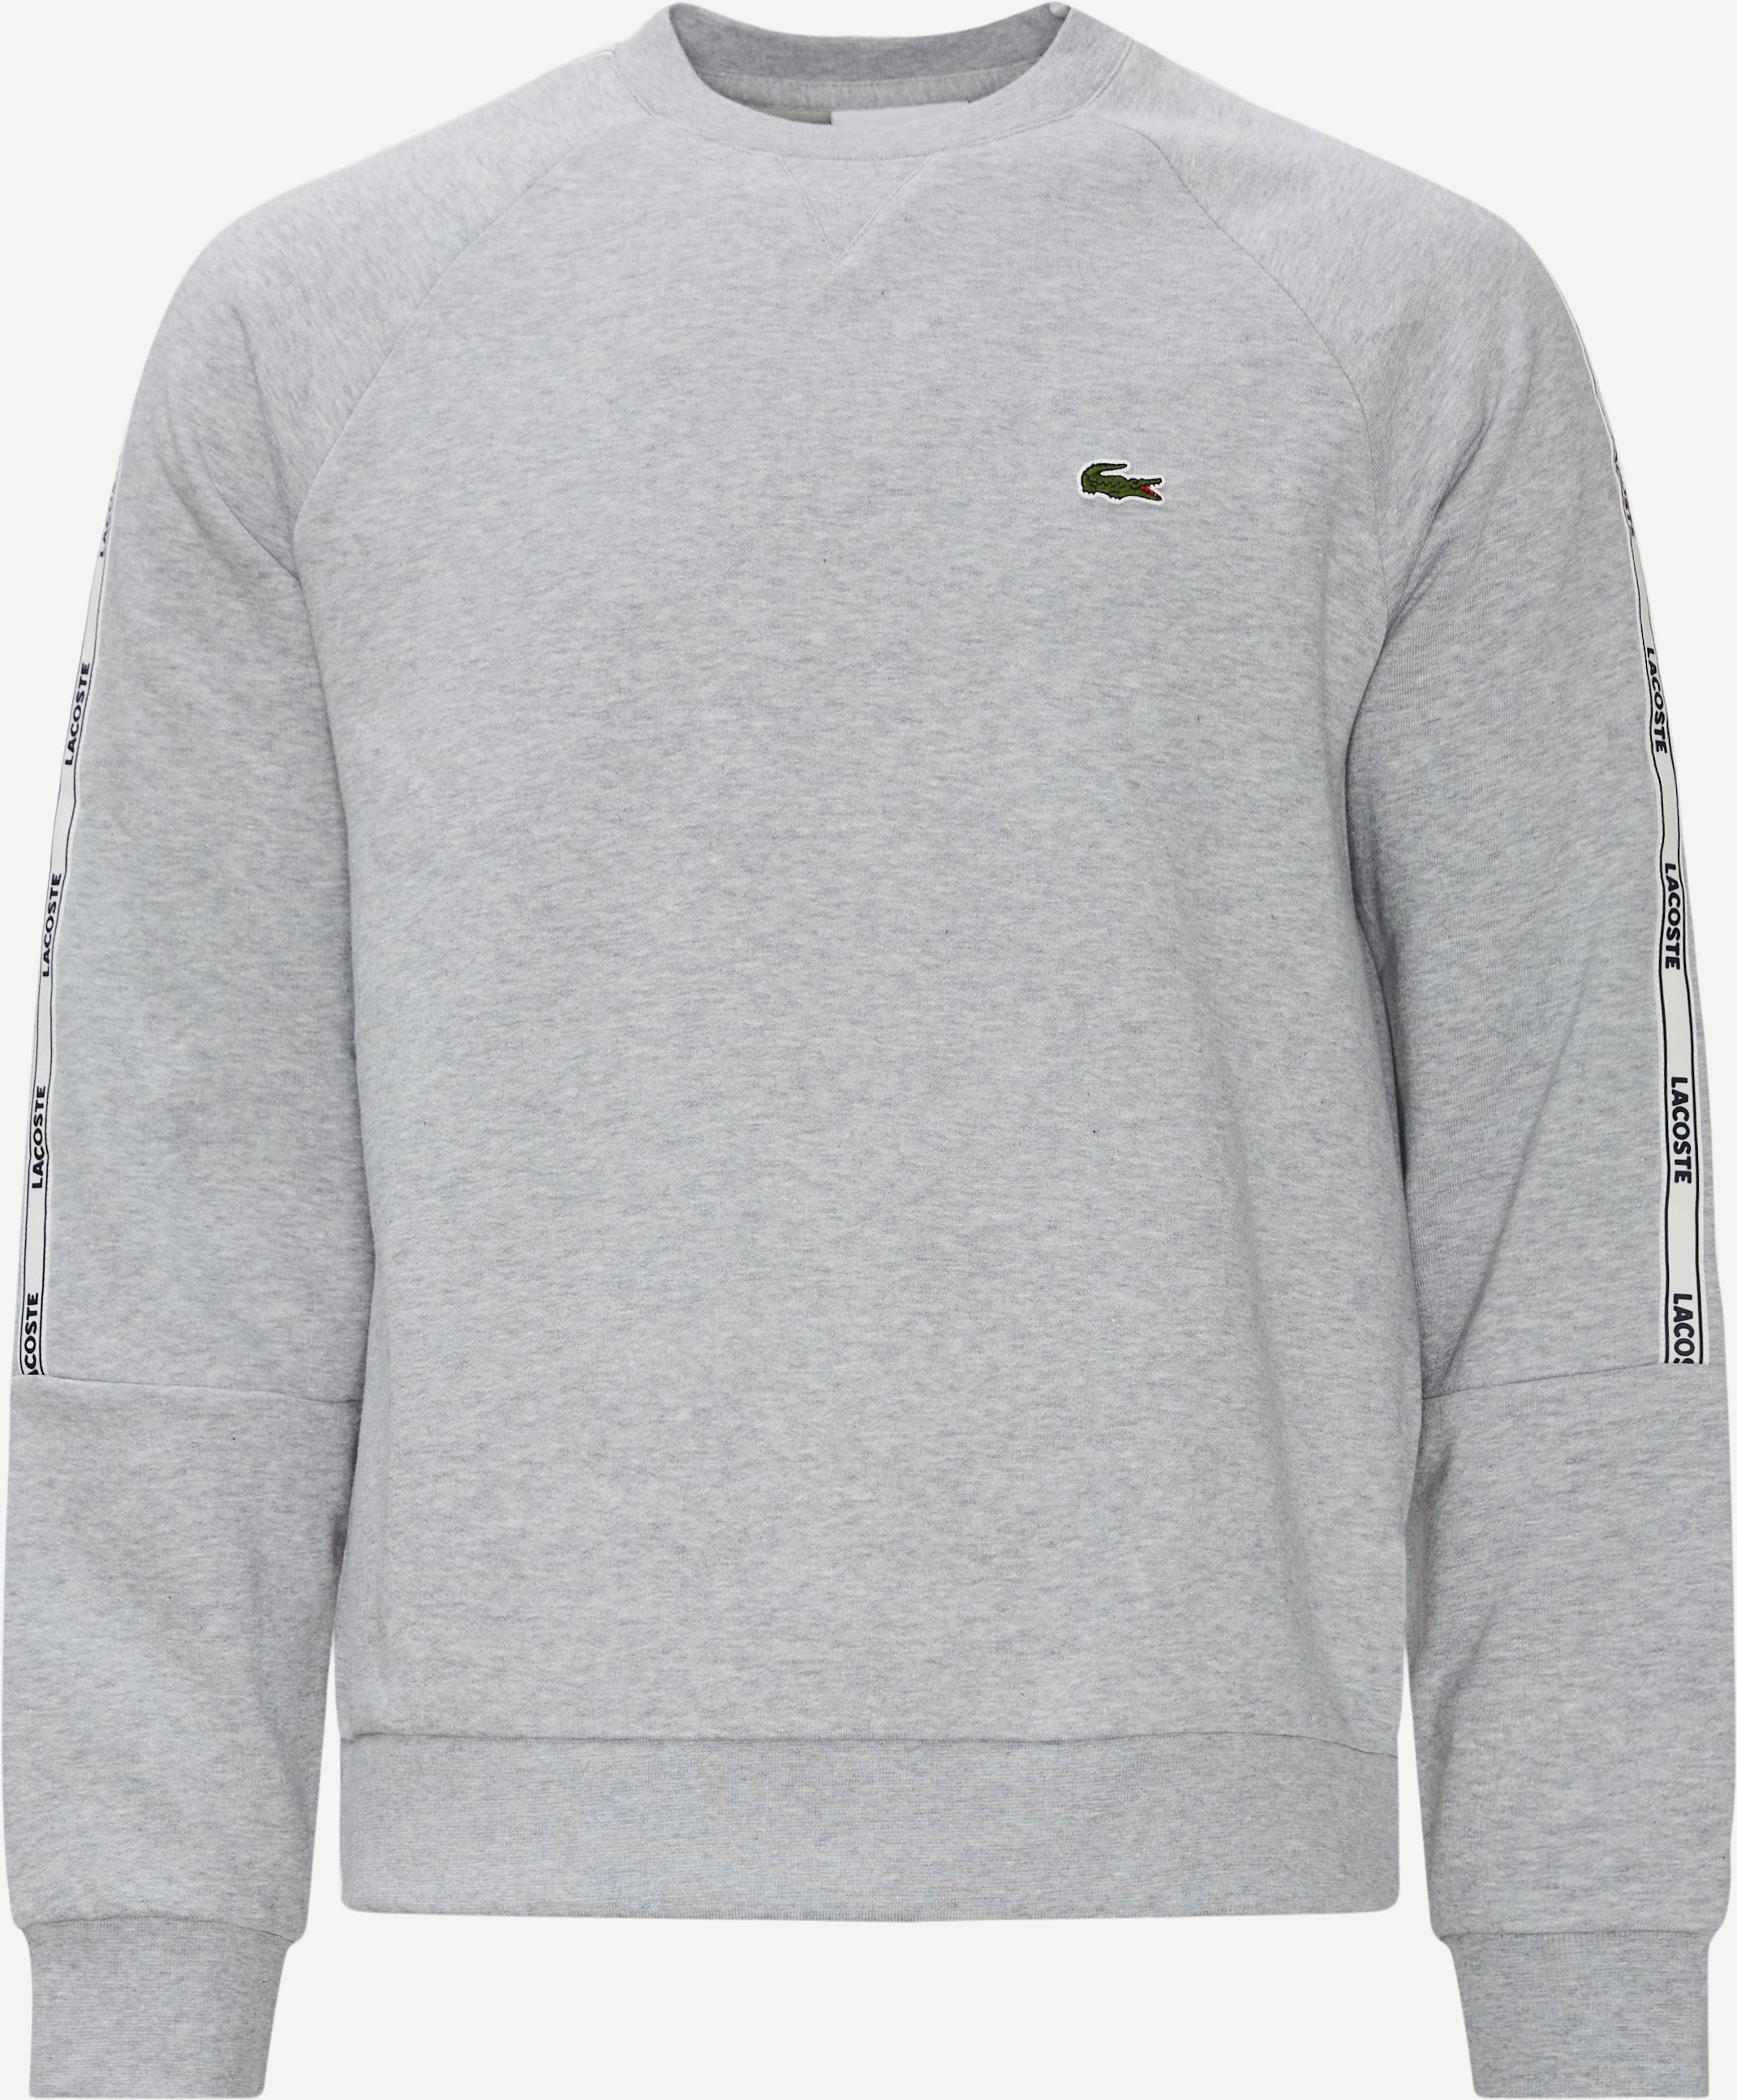 Branded Bands Fleece Sweatshirt - Sweatshirts - Classic fit - Grå